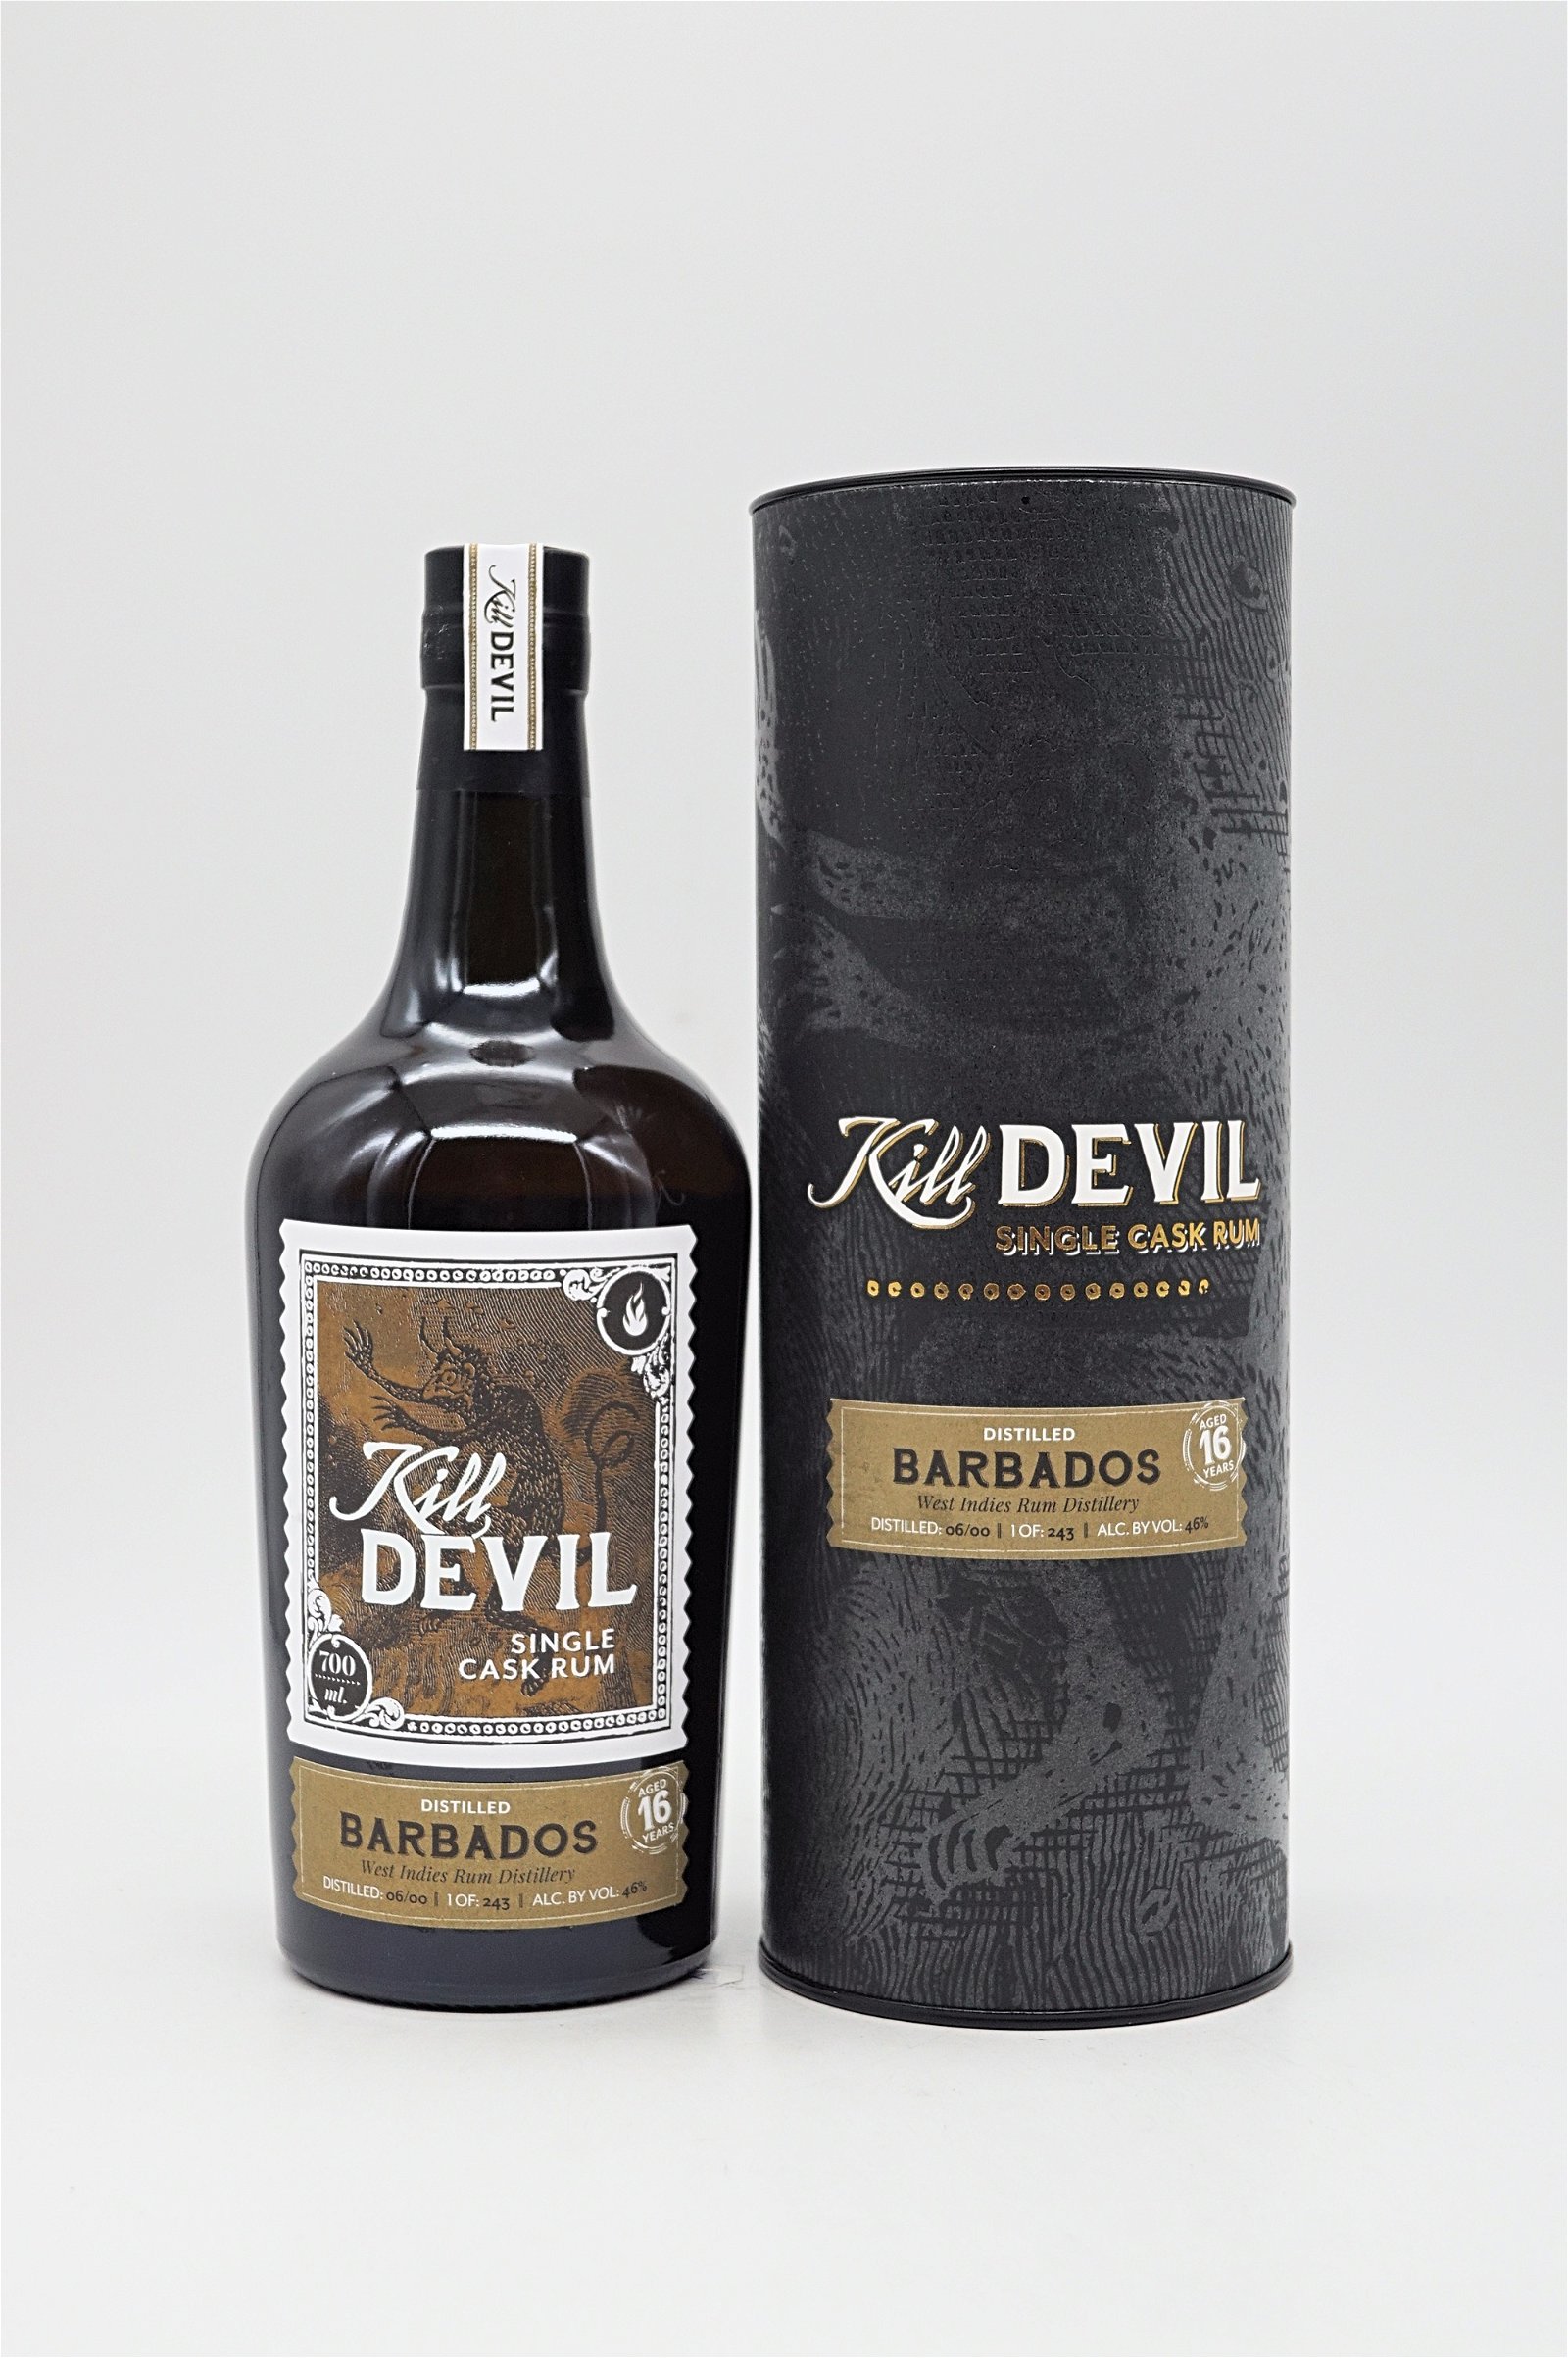 Kill Devil Rum Barbados 16 Jahre West Indies Rum Distillery 243 Fl.